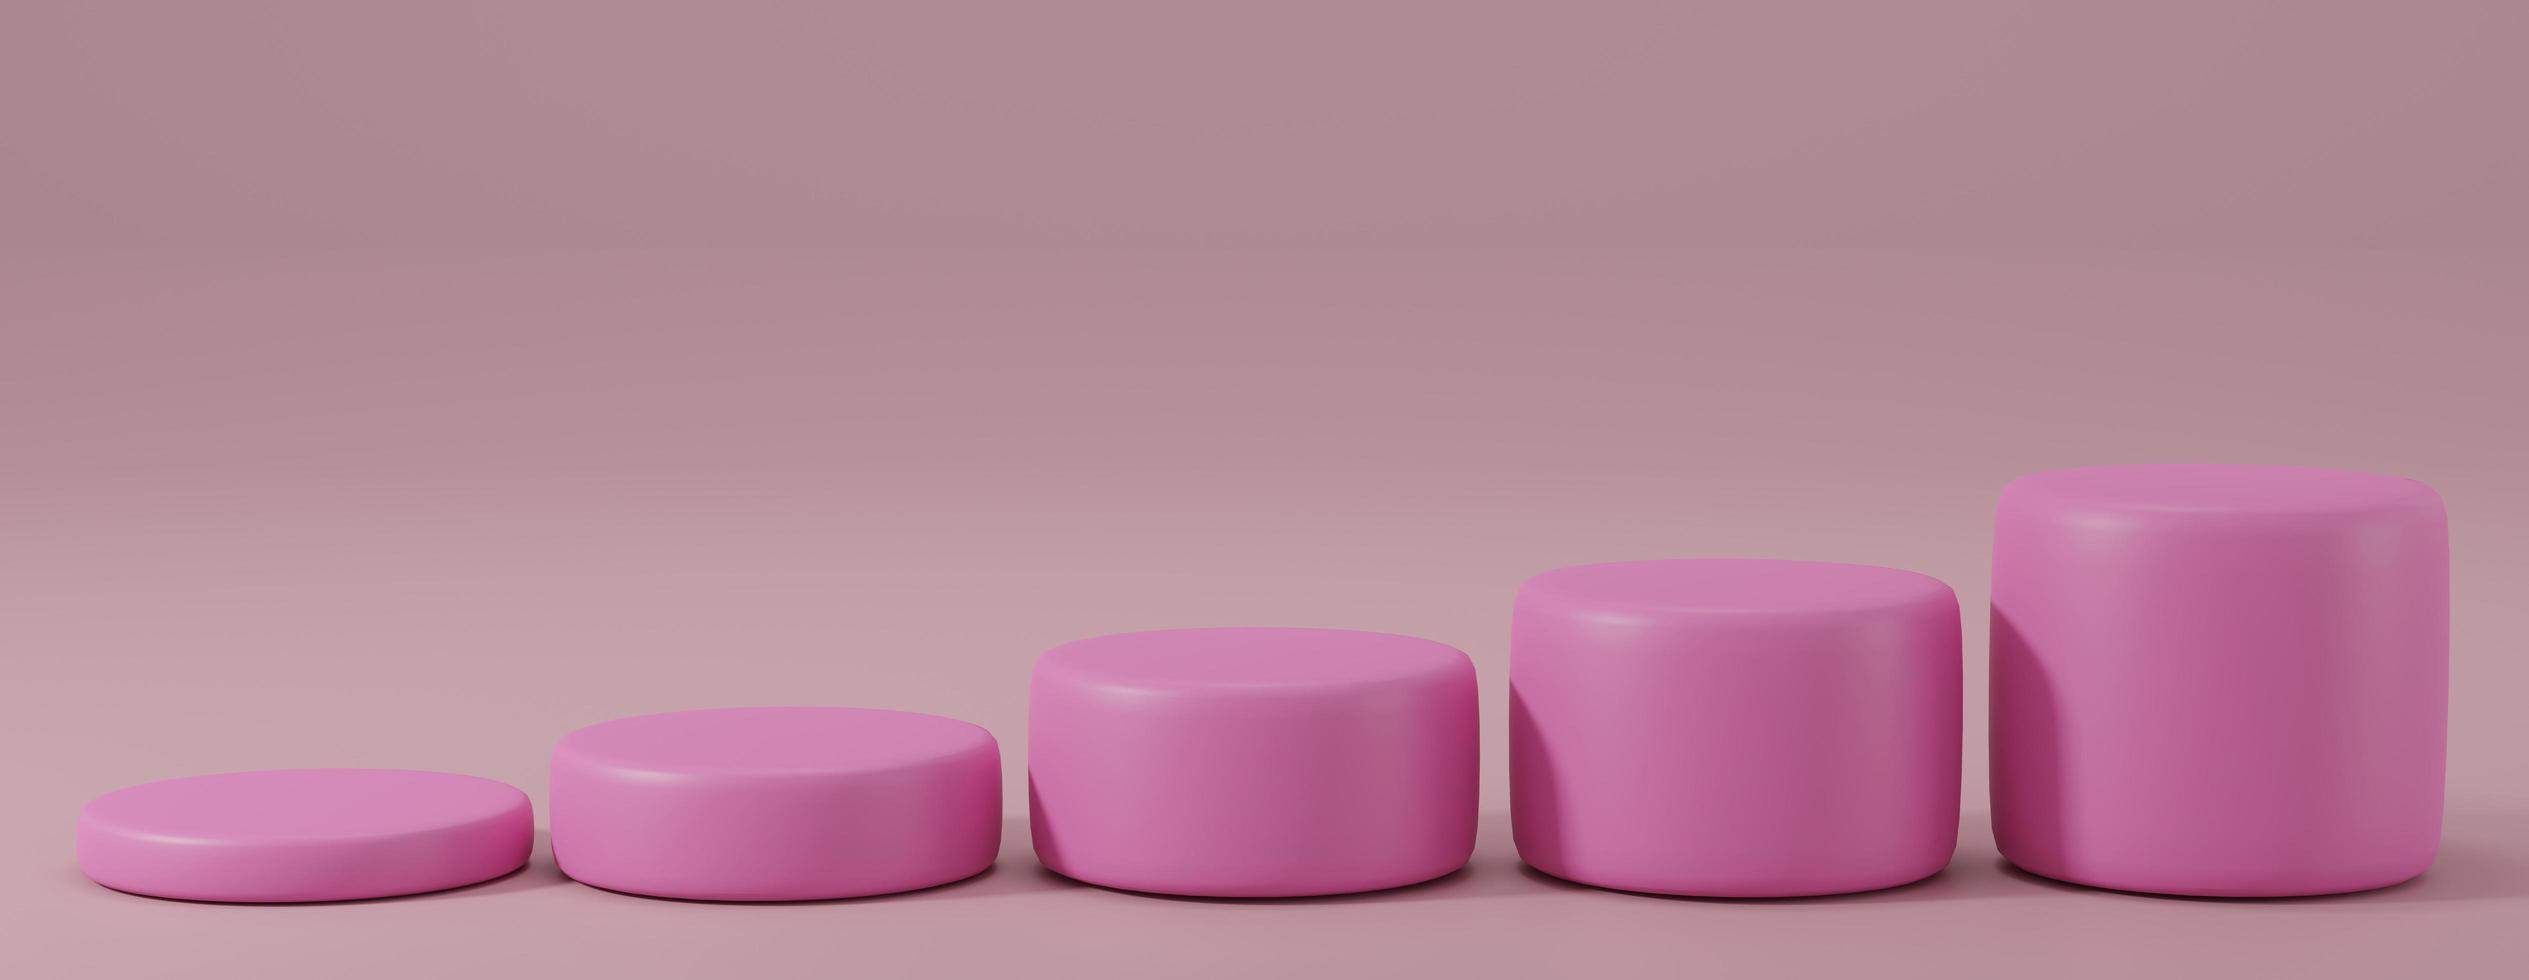 3D rendering correlate multiple pink podium photo